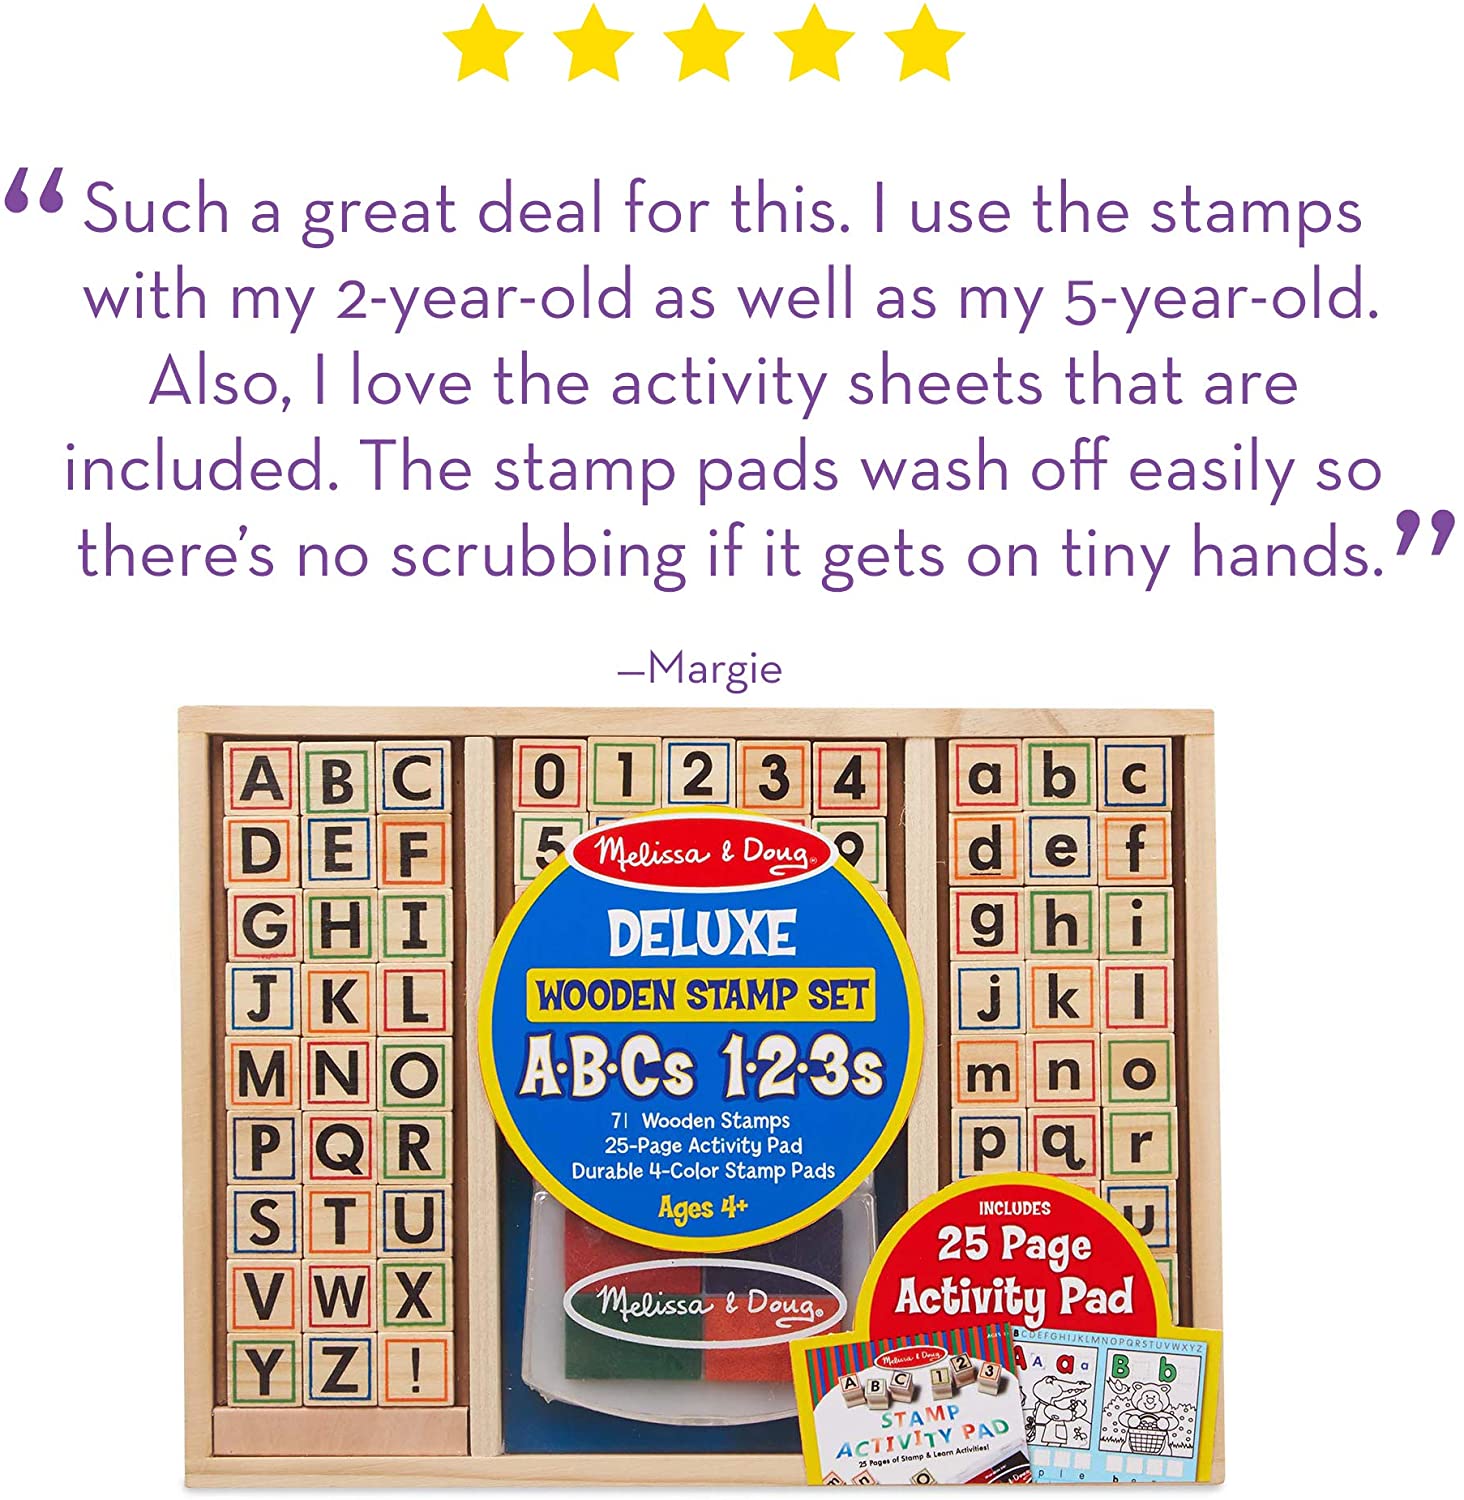 Melissa & Doug Deluxe Wooden Stamp Set - ABCs 123s 